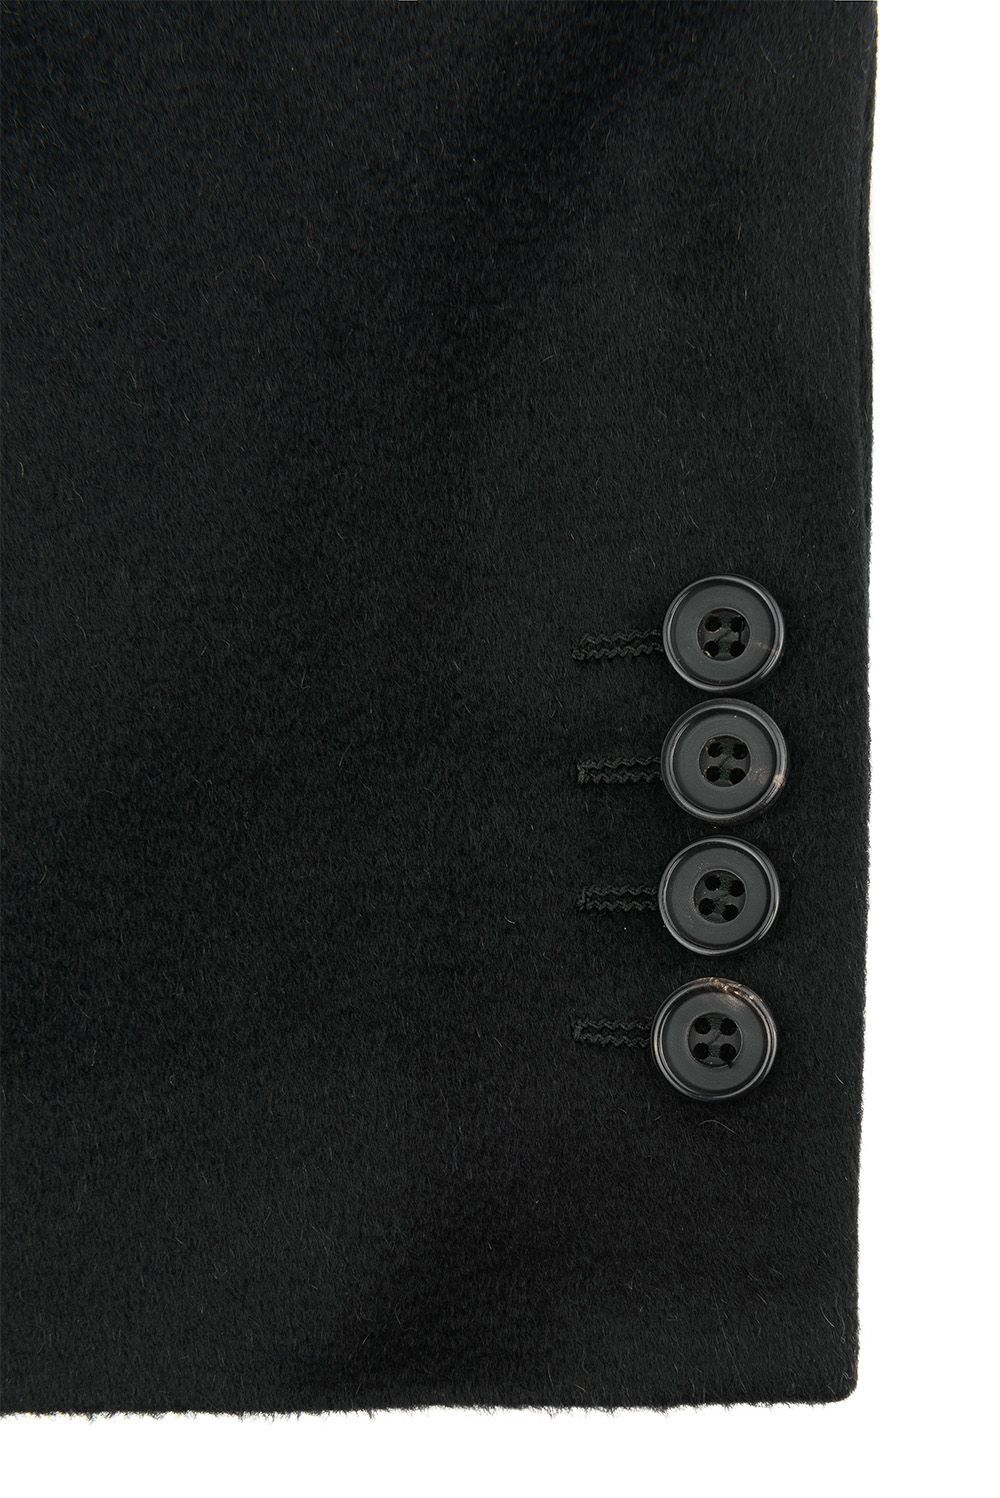 Palton clasic capone negru uni 3